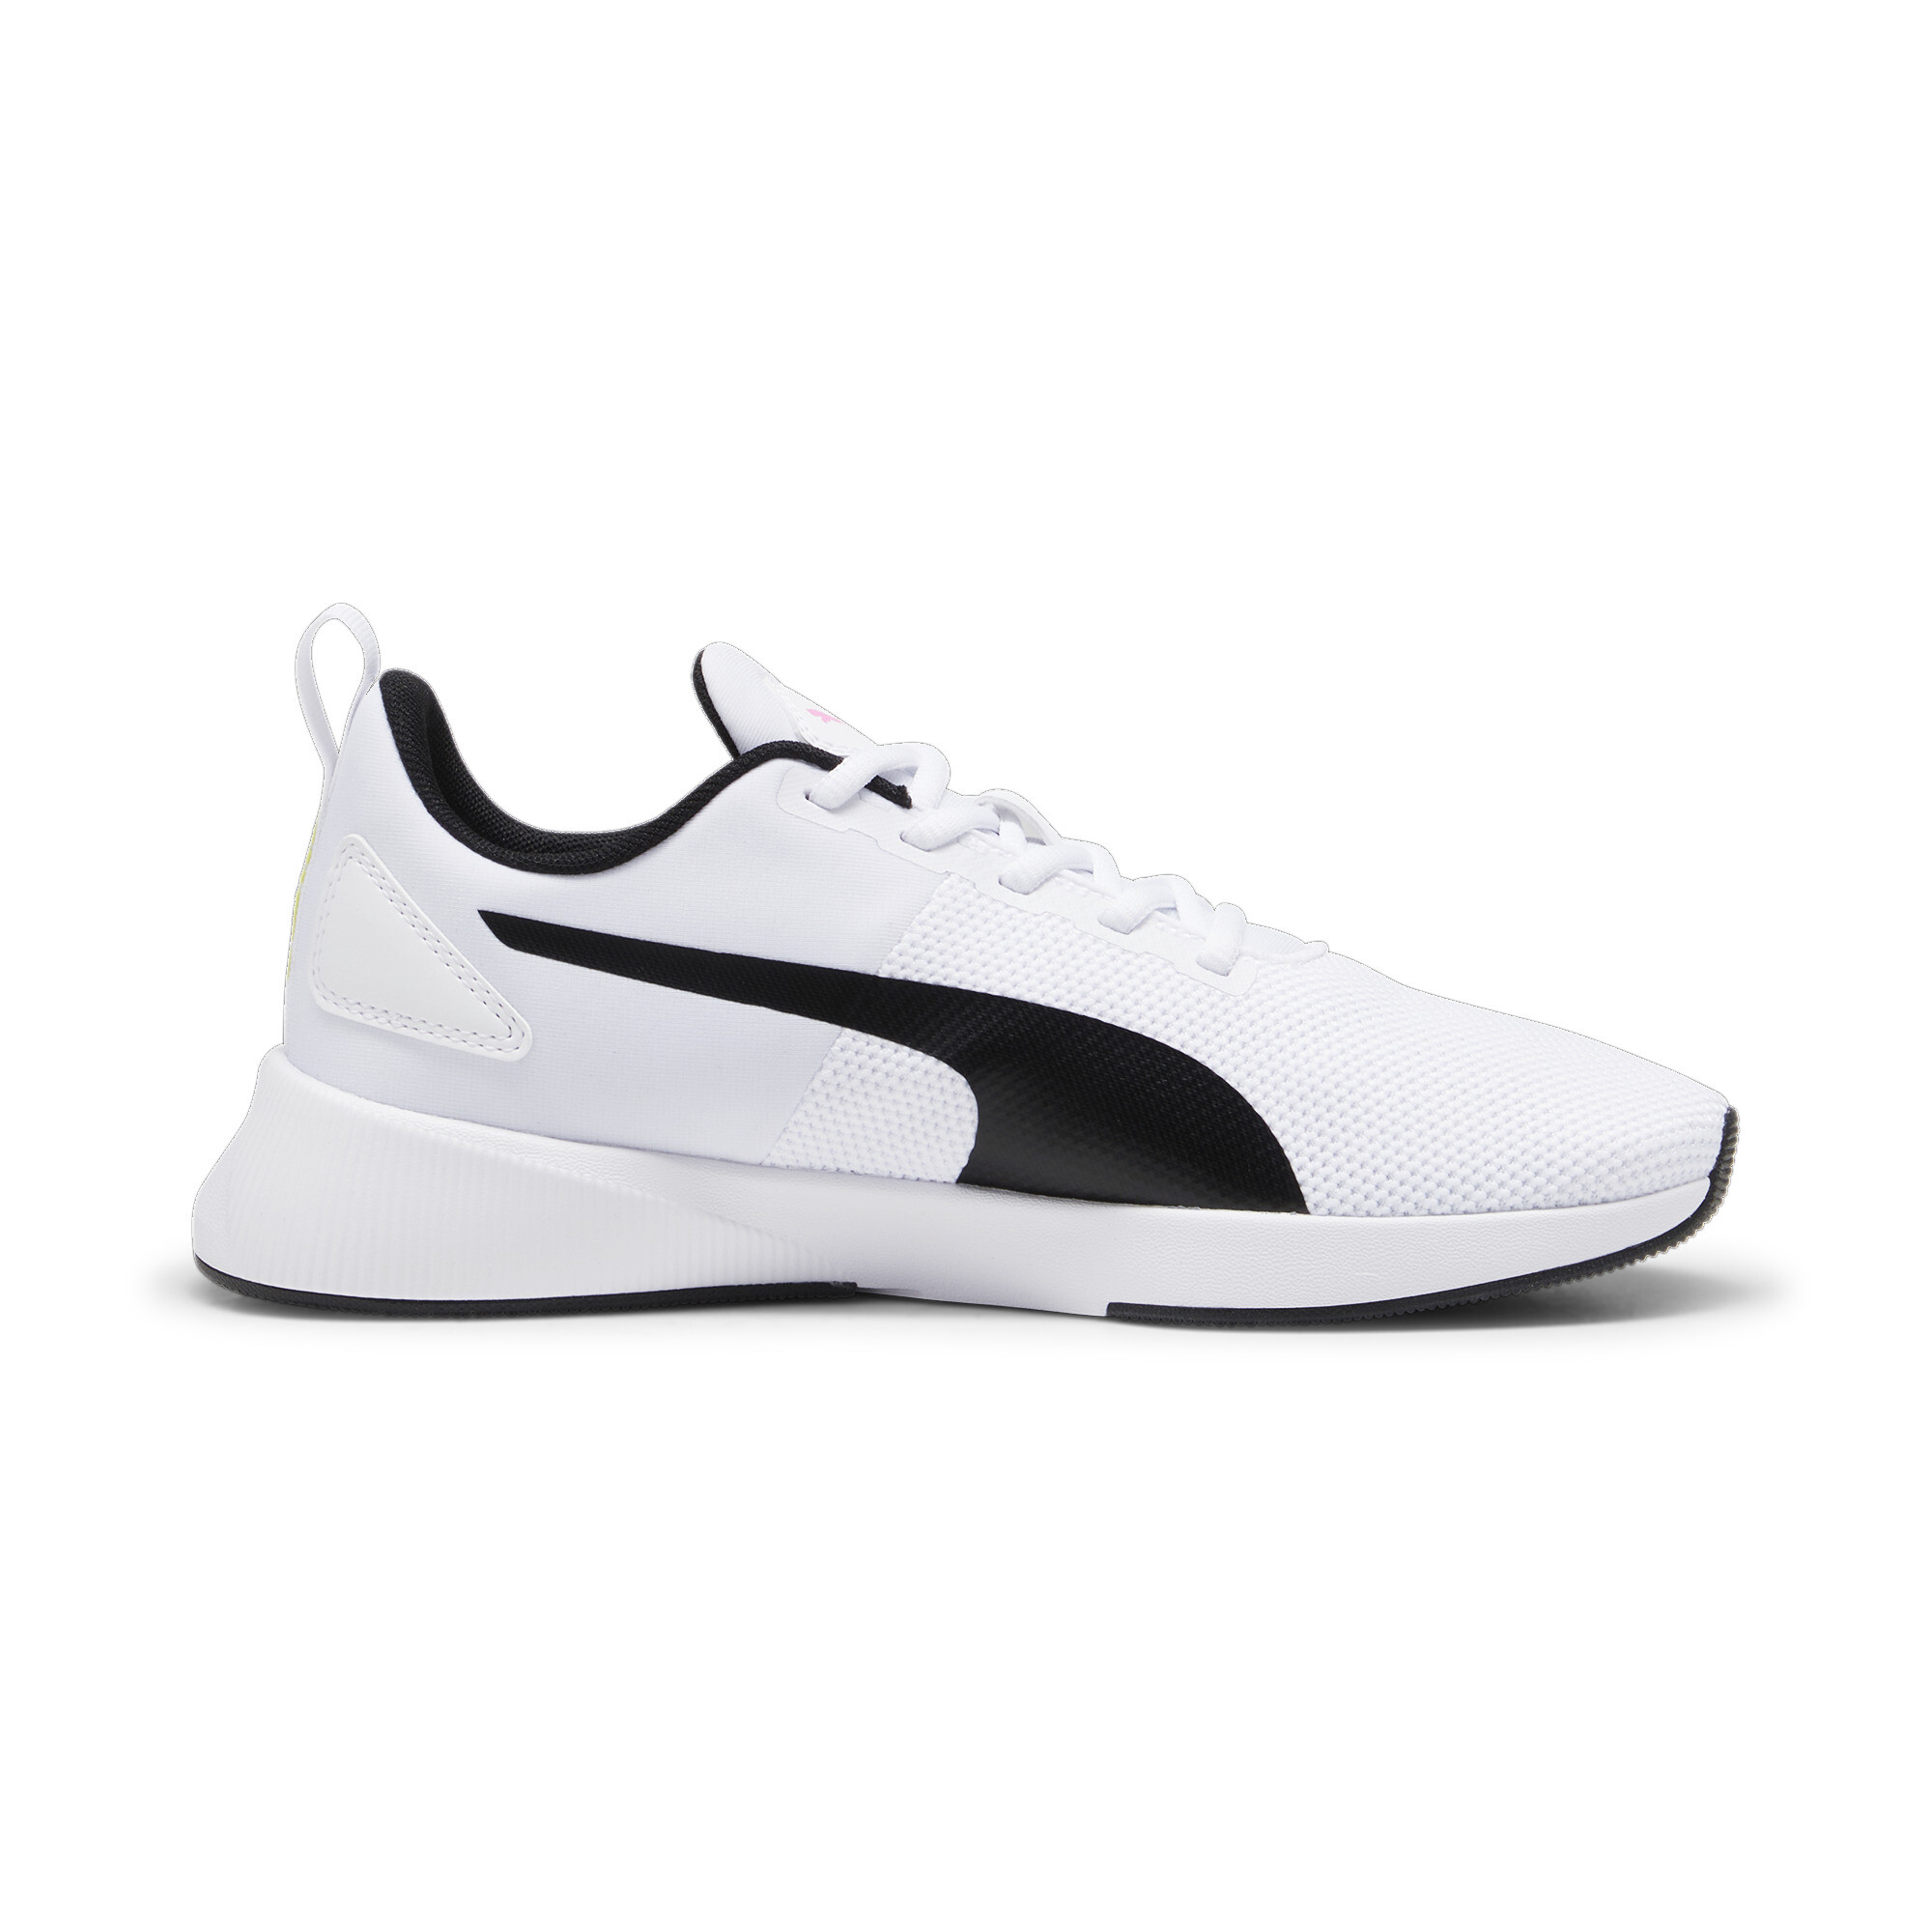 Men's PUMA Flyer Running Shoes In White, Size EU 42.5